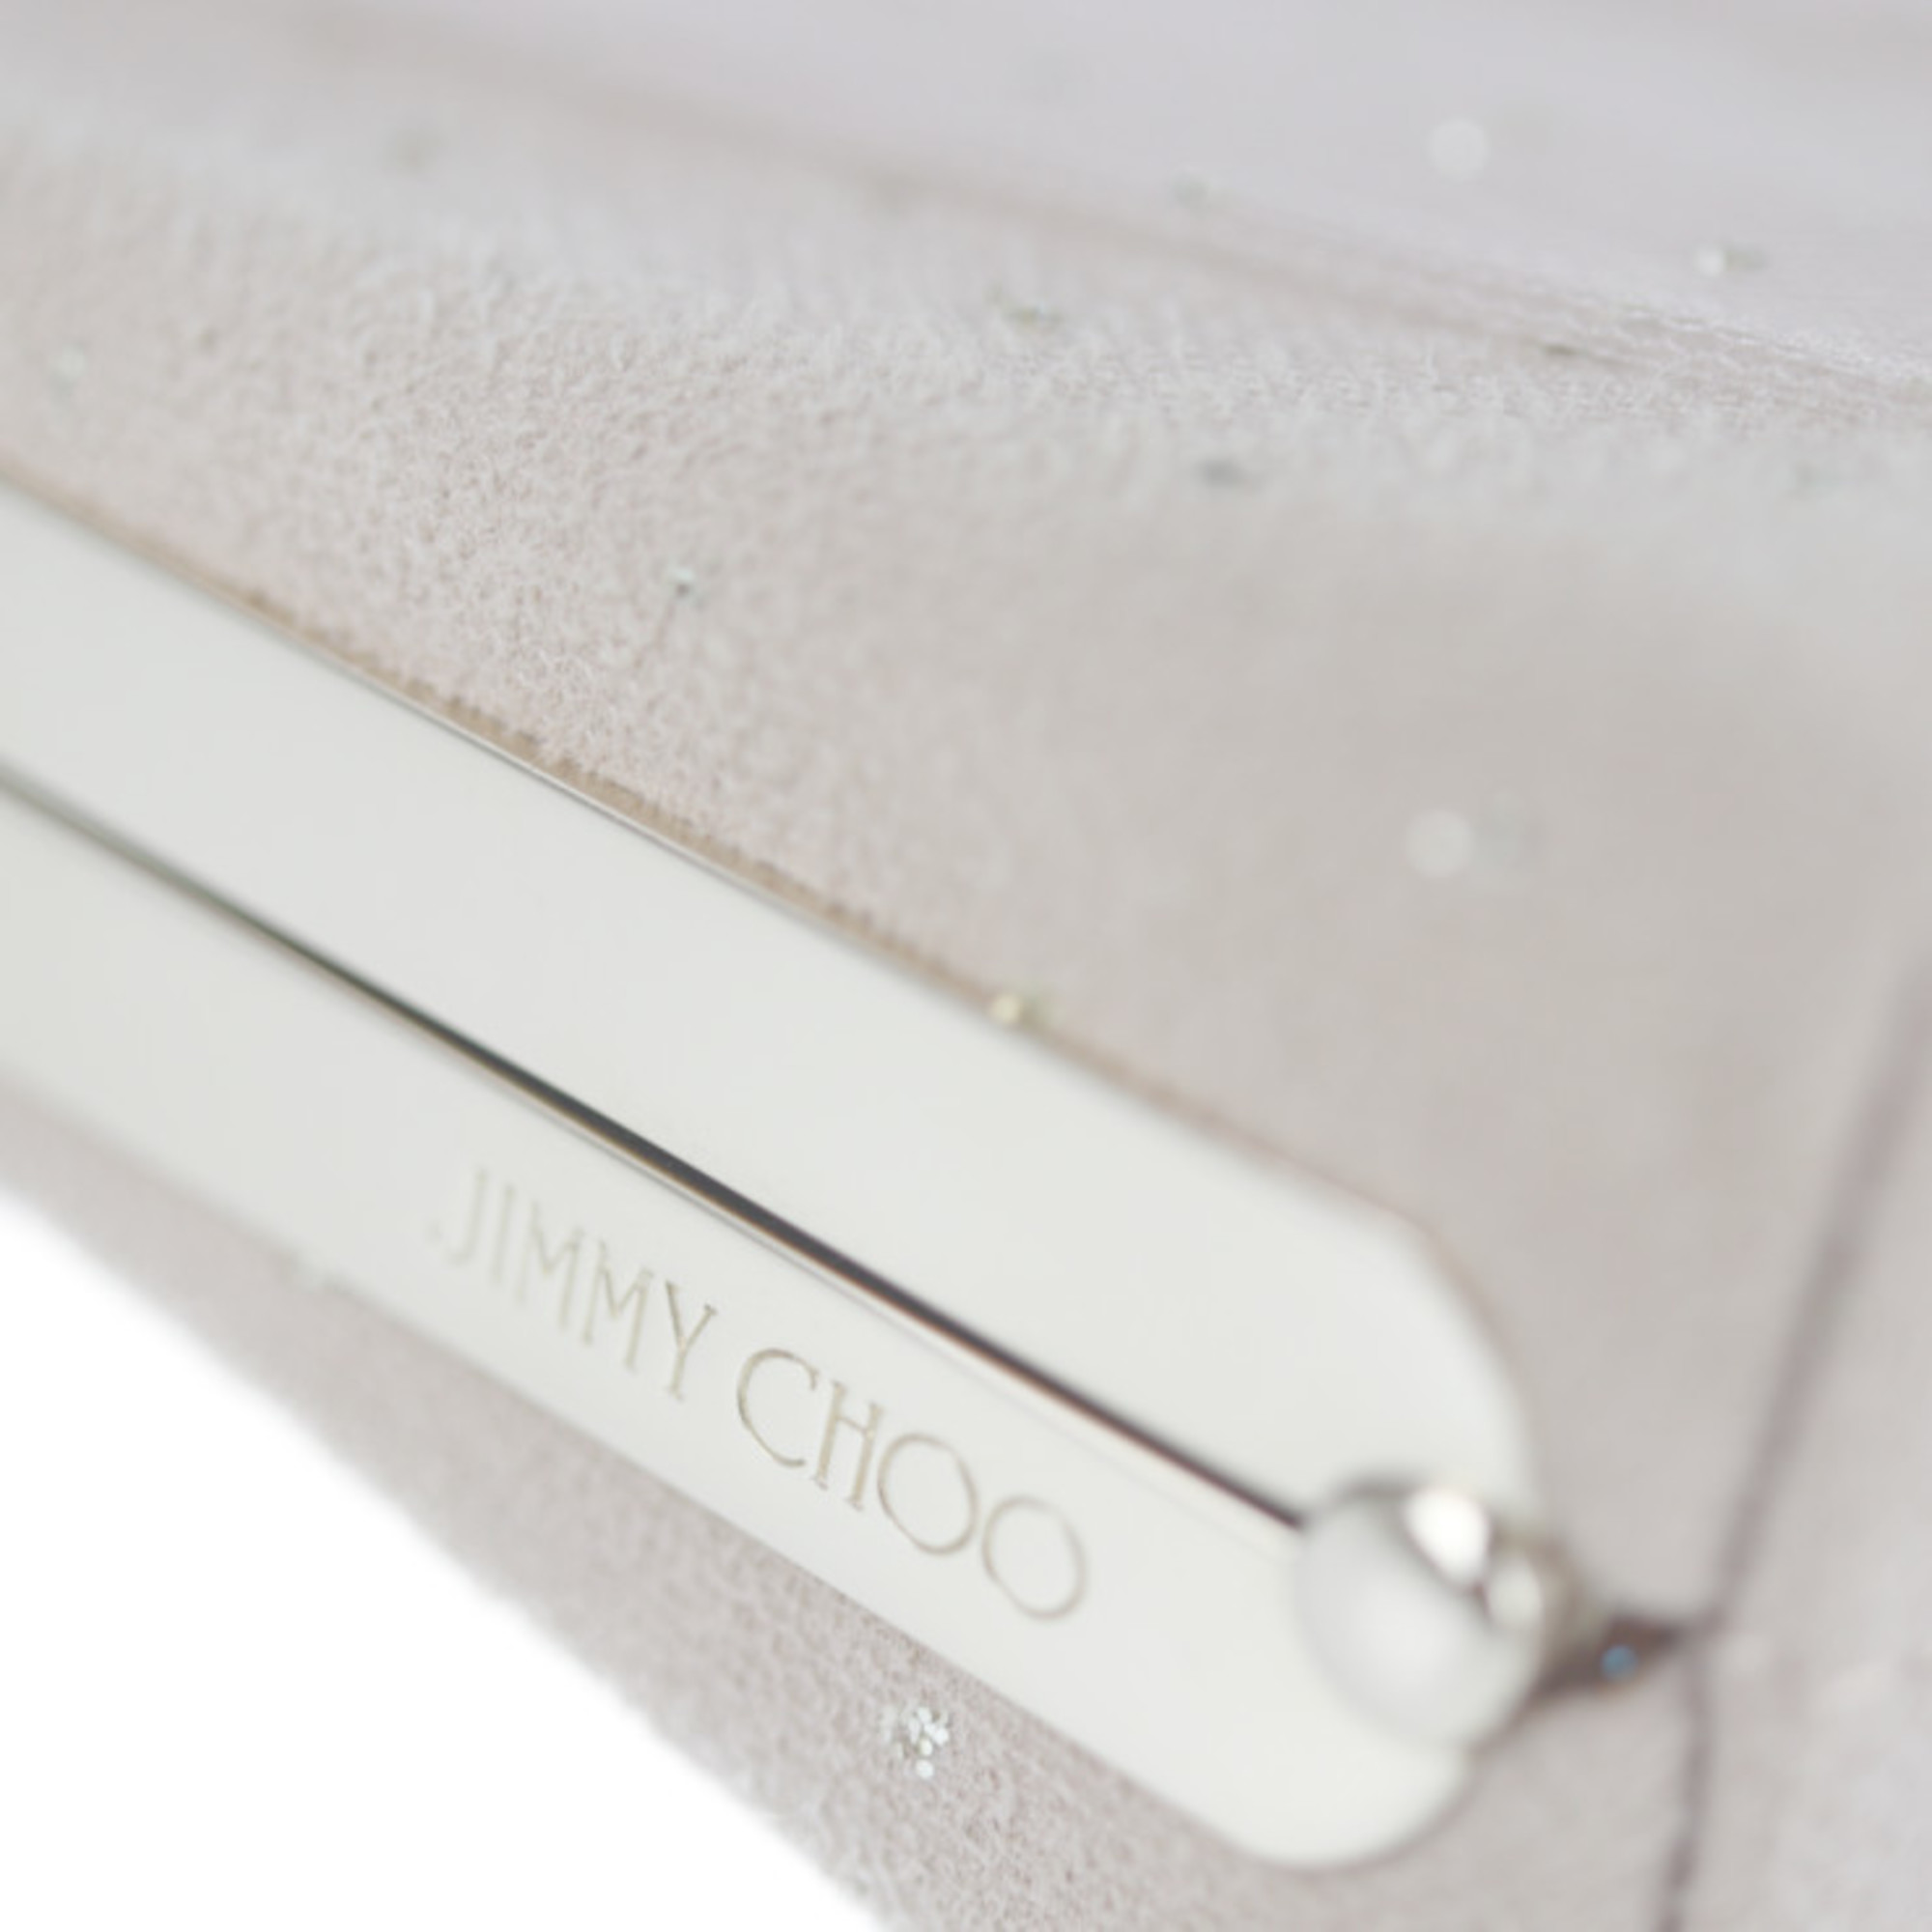 JIMMY CHOO Jimmy Choo Celeste clutch bag 183 CELESTE canvas pink beige gold hardware clasp chain 2WAY shoulder party